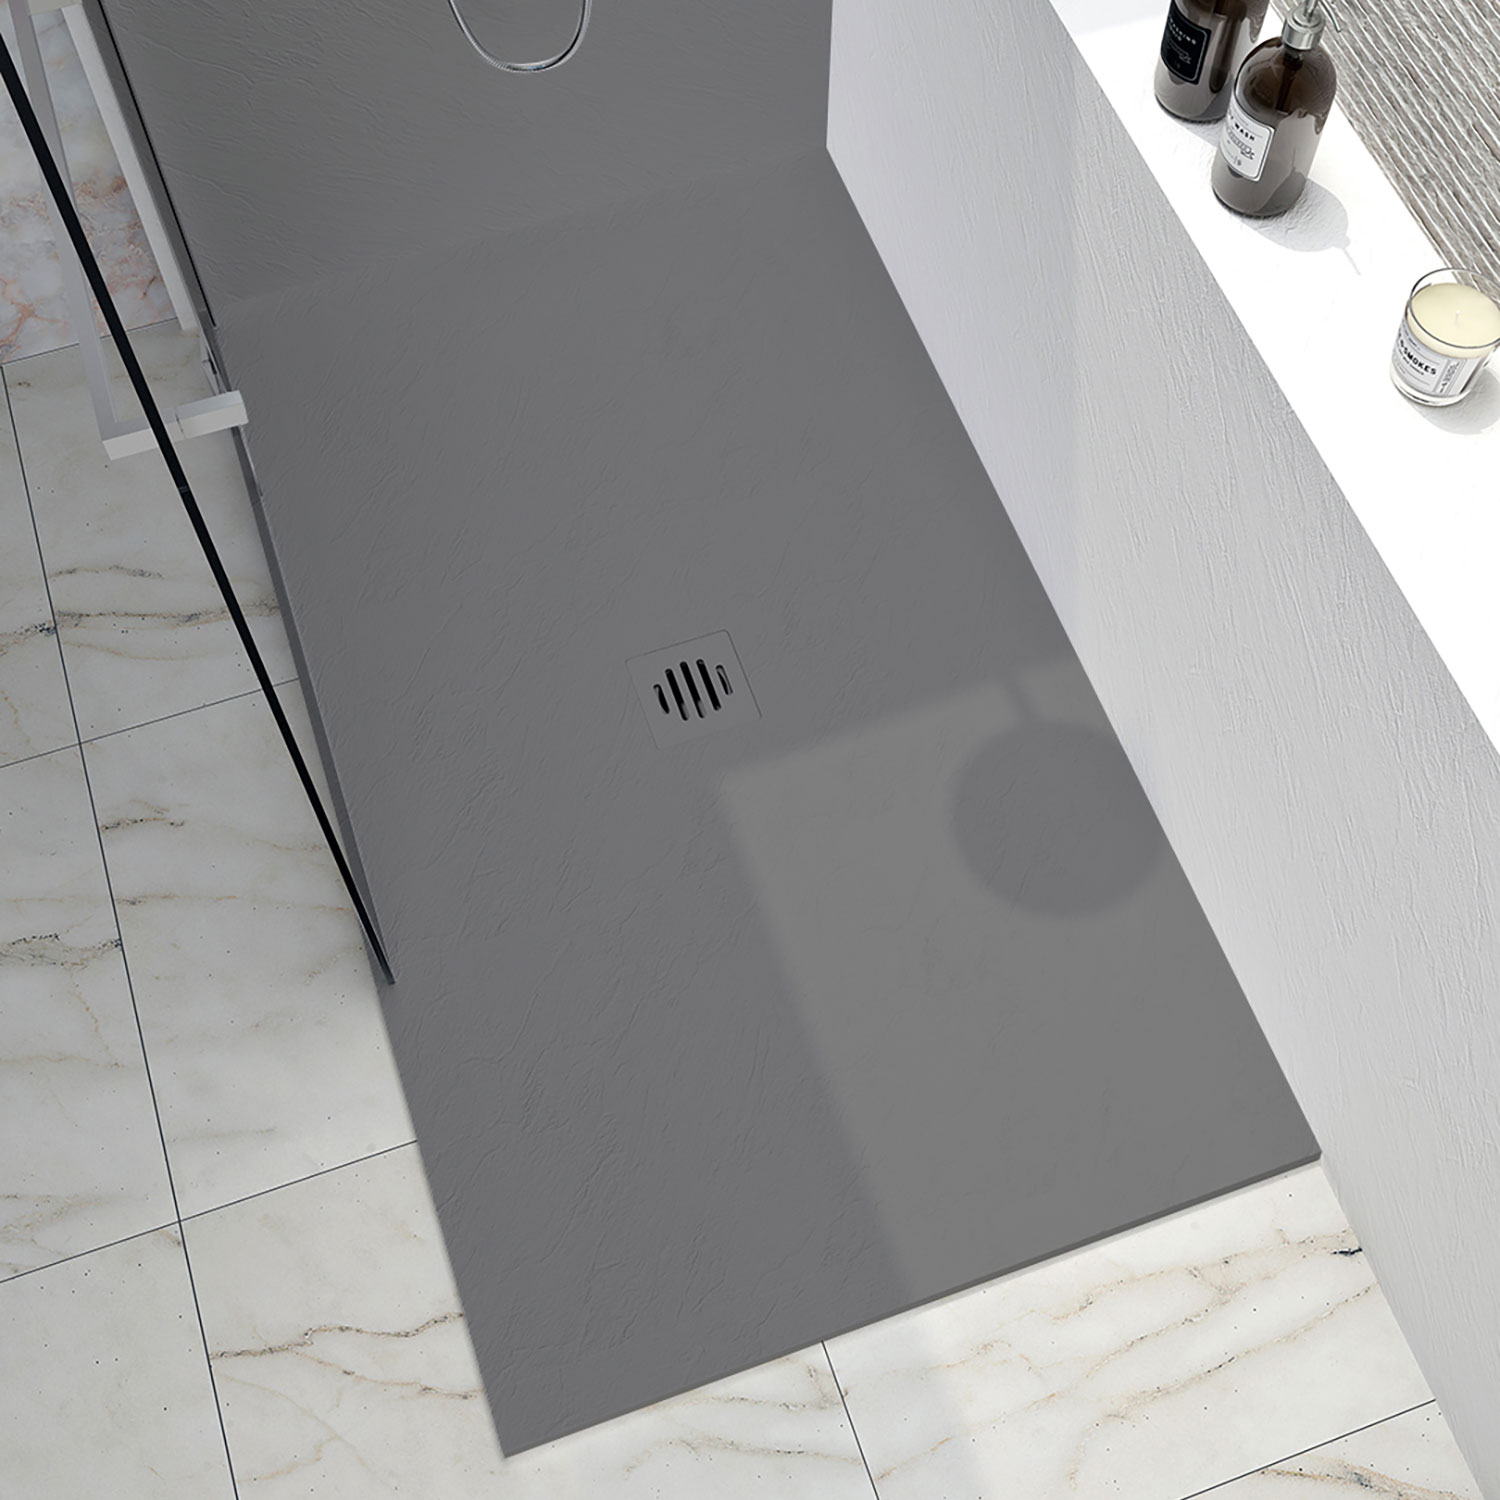 Shower base Slate 42 x 36, custom-made tile flange installation, in concrete grey